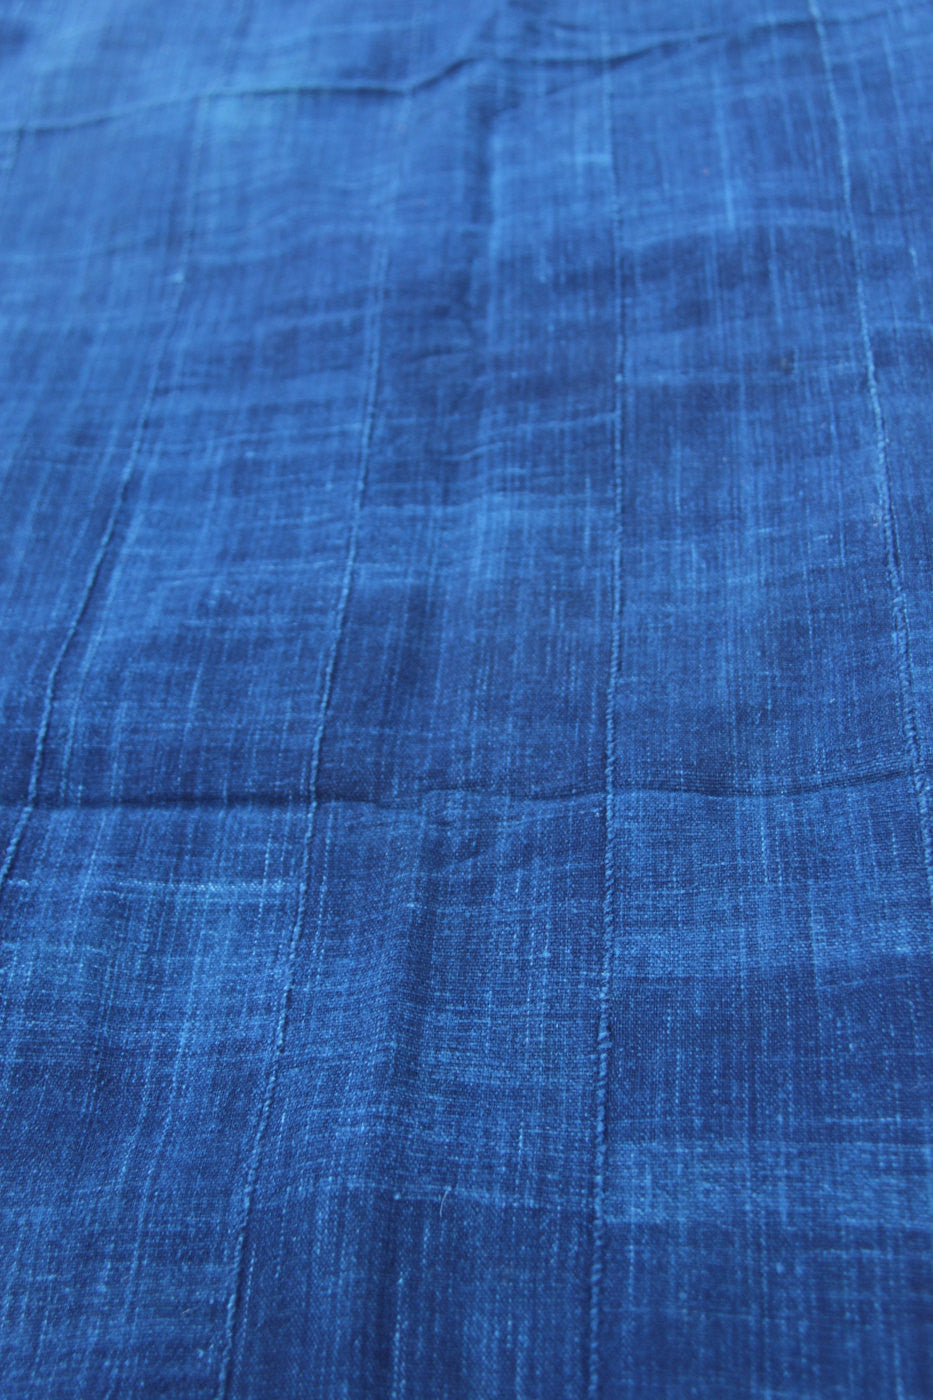 Indigo Fringe, Blue Strip Cloth w/ Tassels, Boho Tribal Wall Hanging